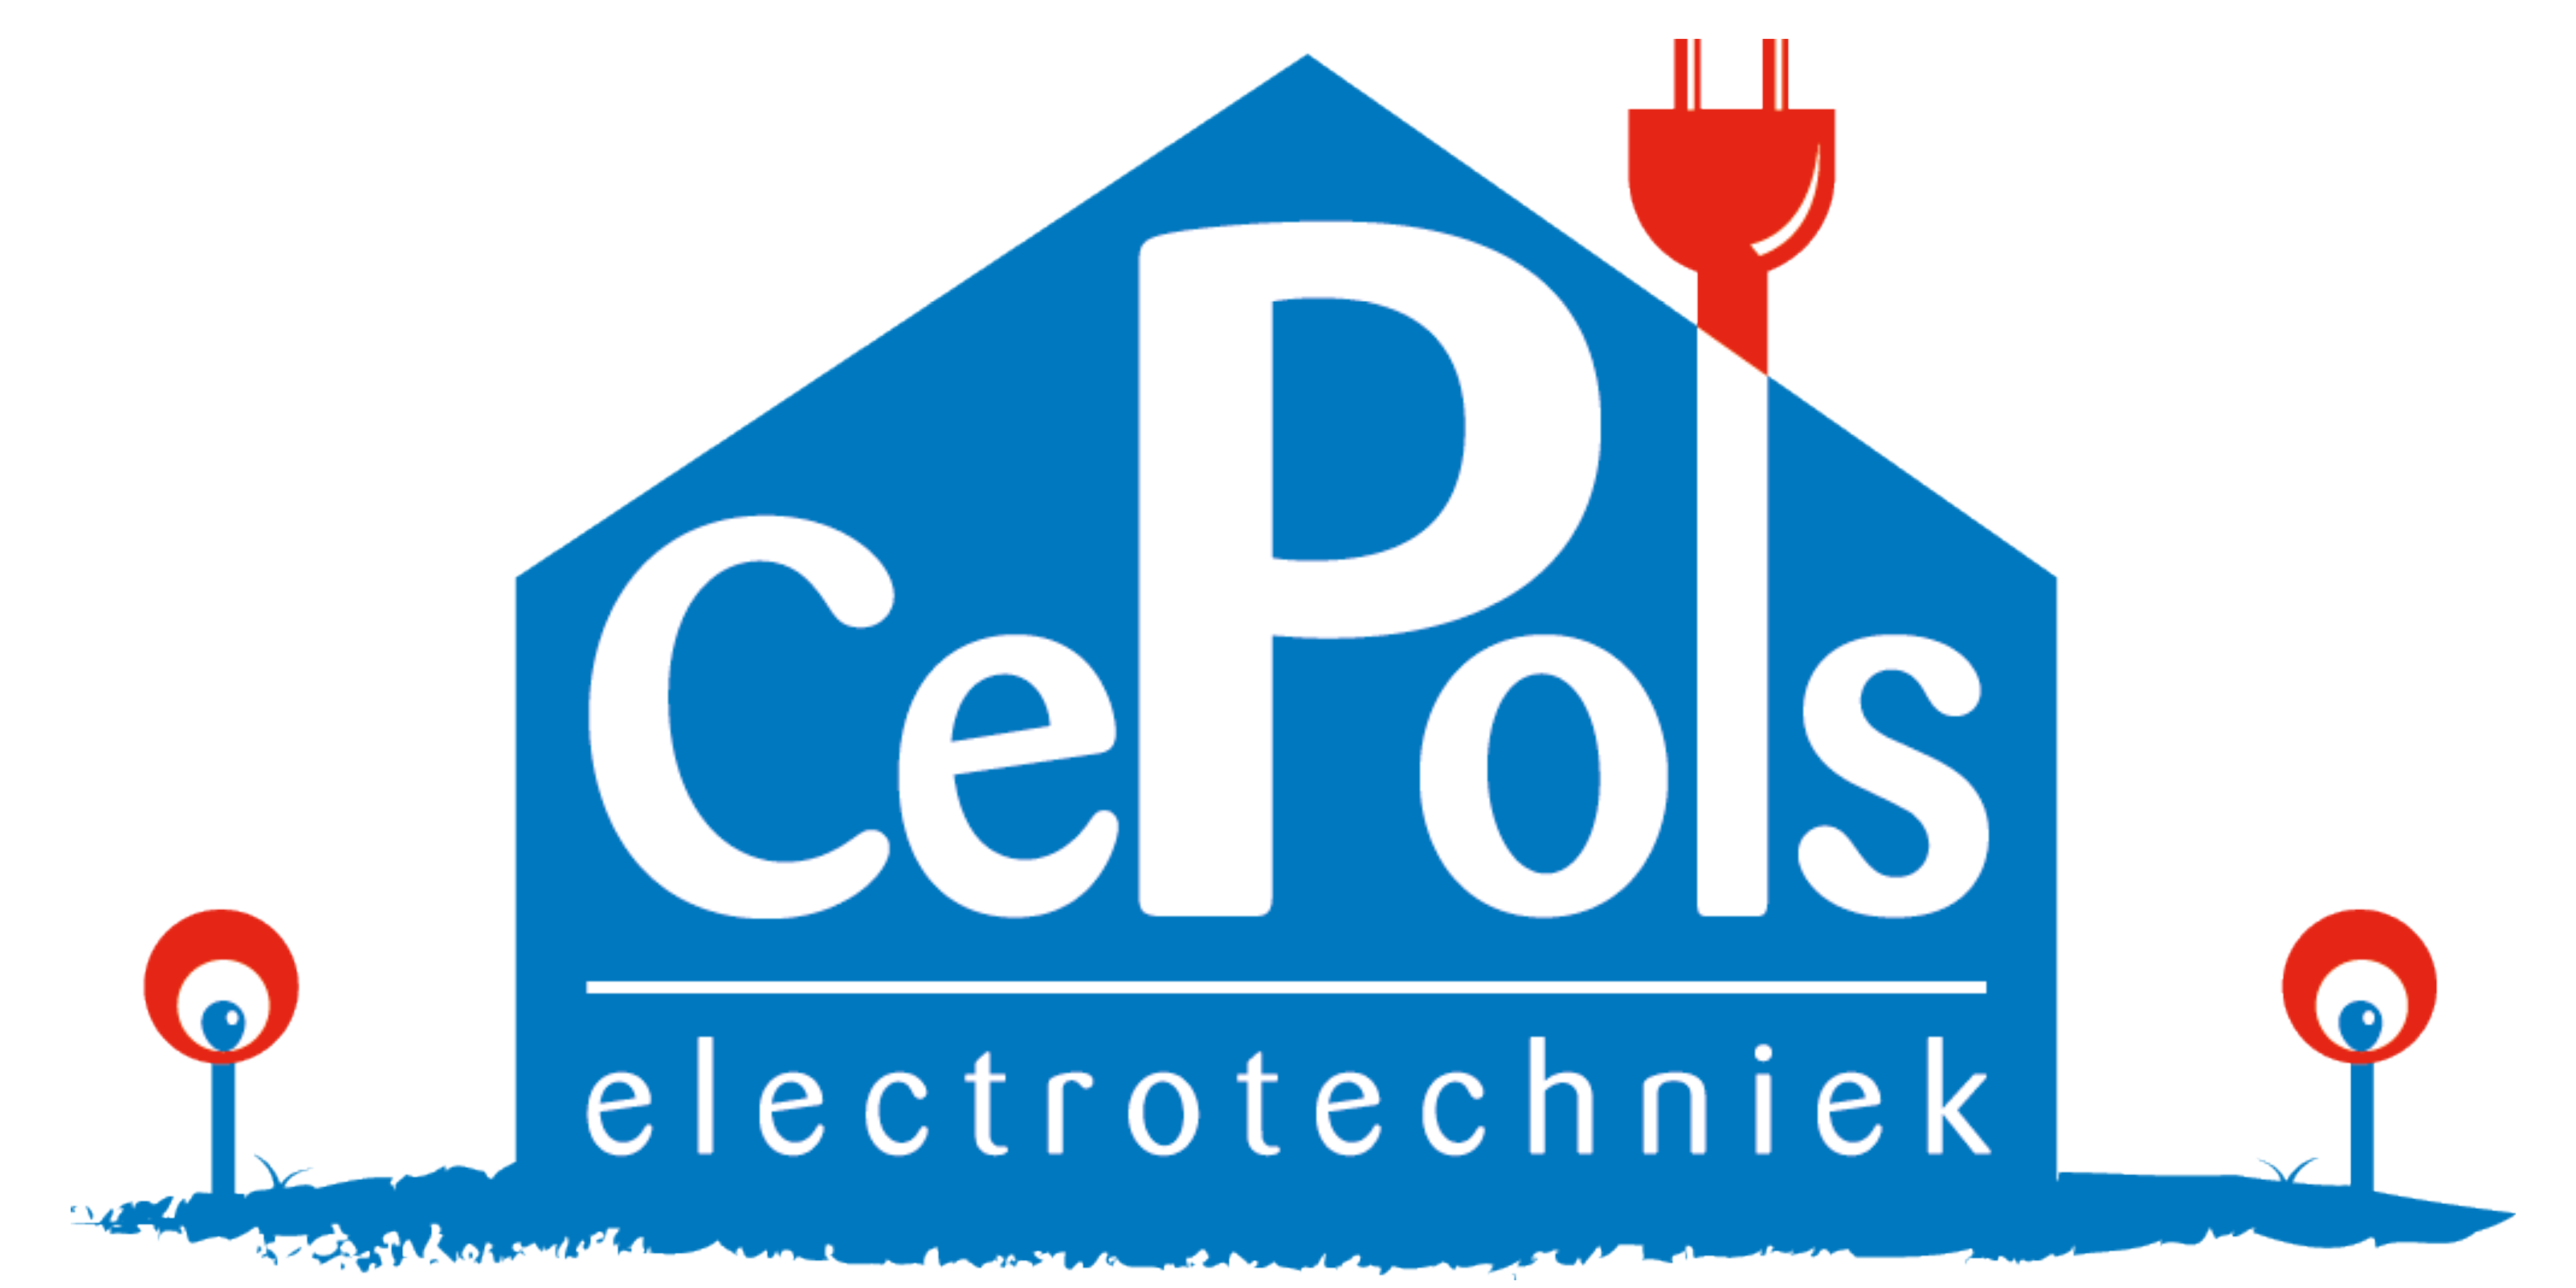 CePols elektrotechniek logo